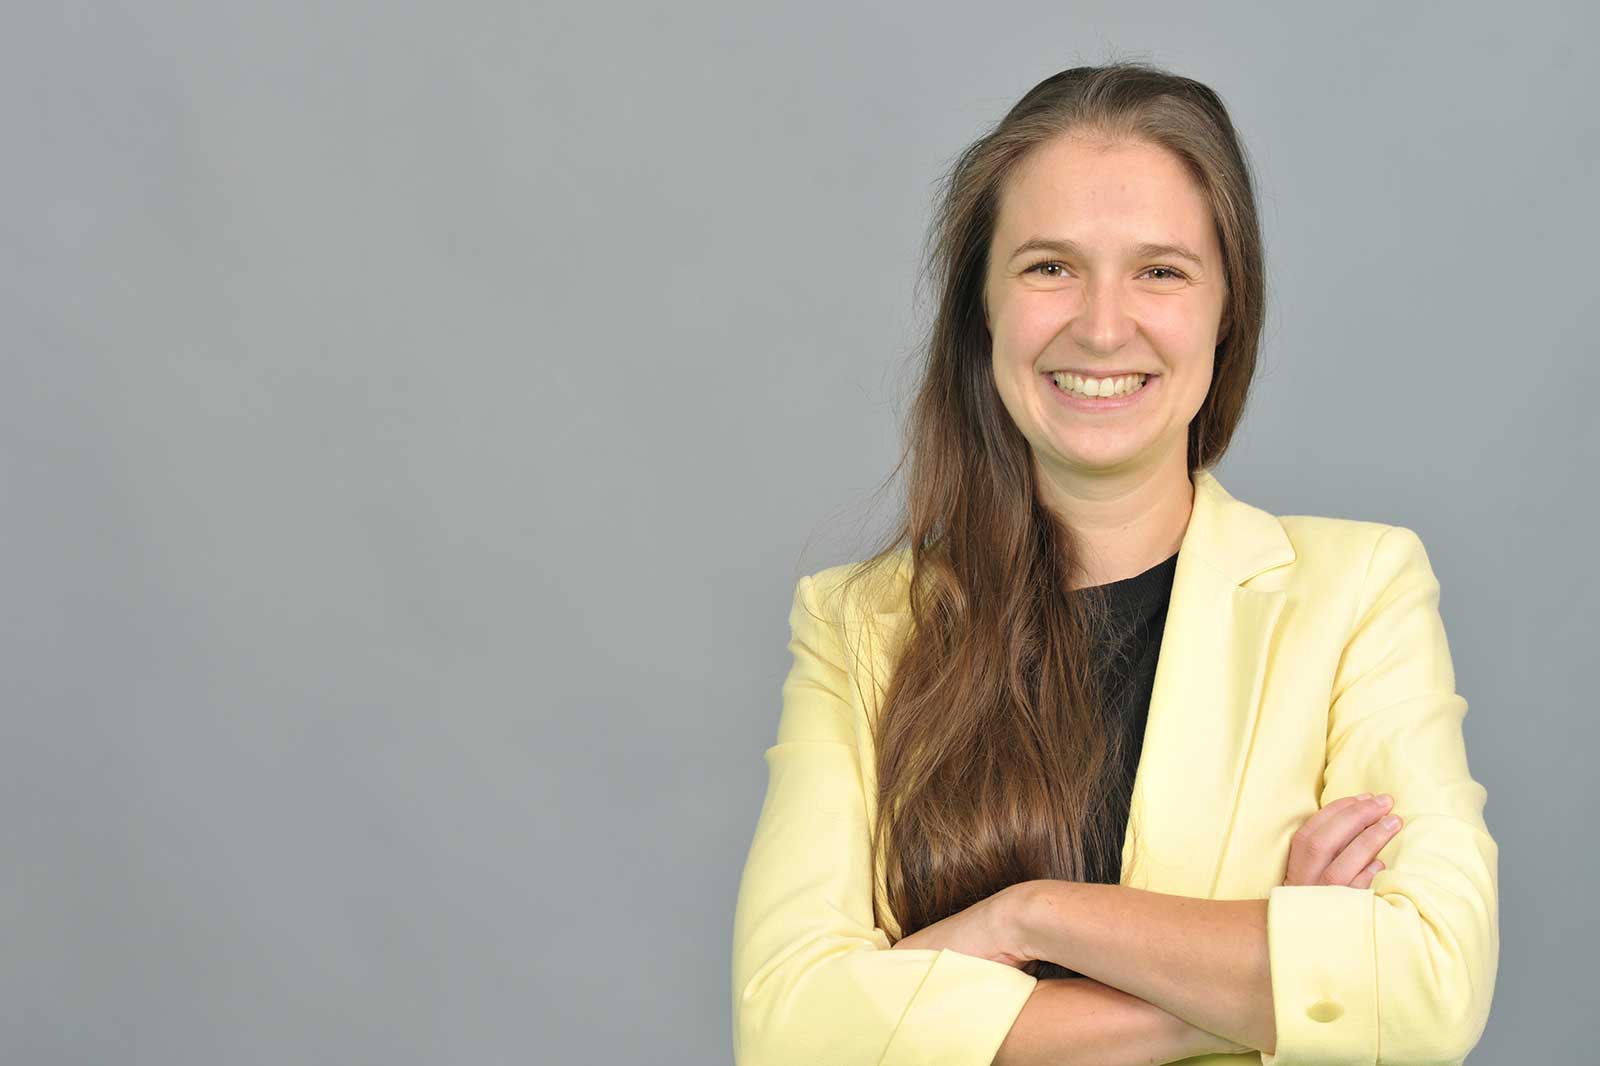 Hannah-Isabell Härter | Working student @ RWE Technology GmbH